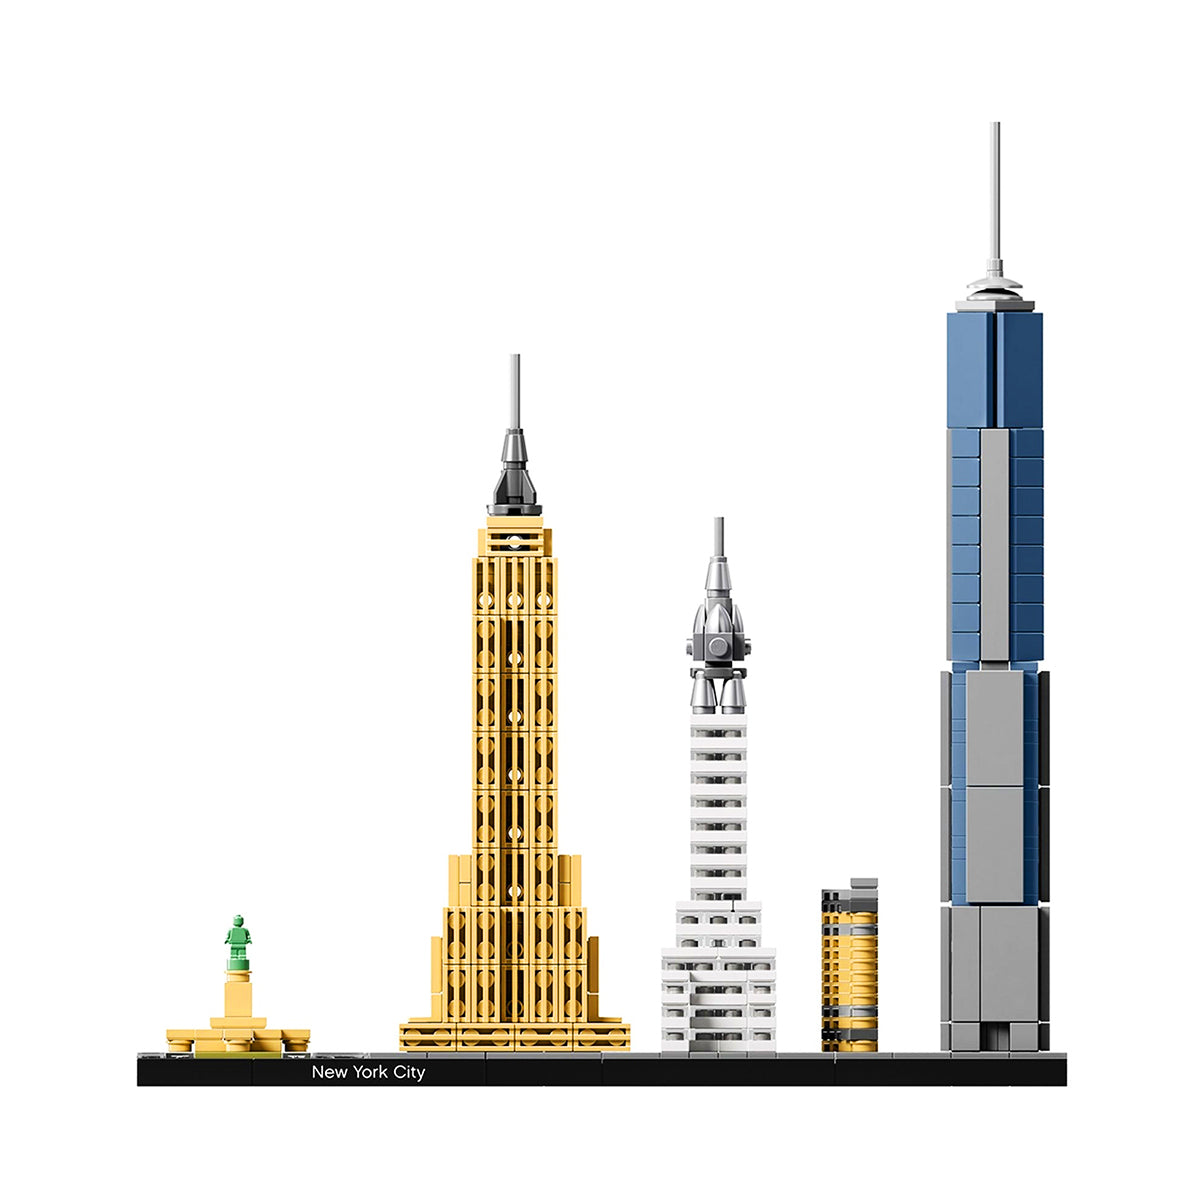 LEGO Architecture New York City Skyline Building Set 21028